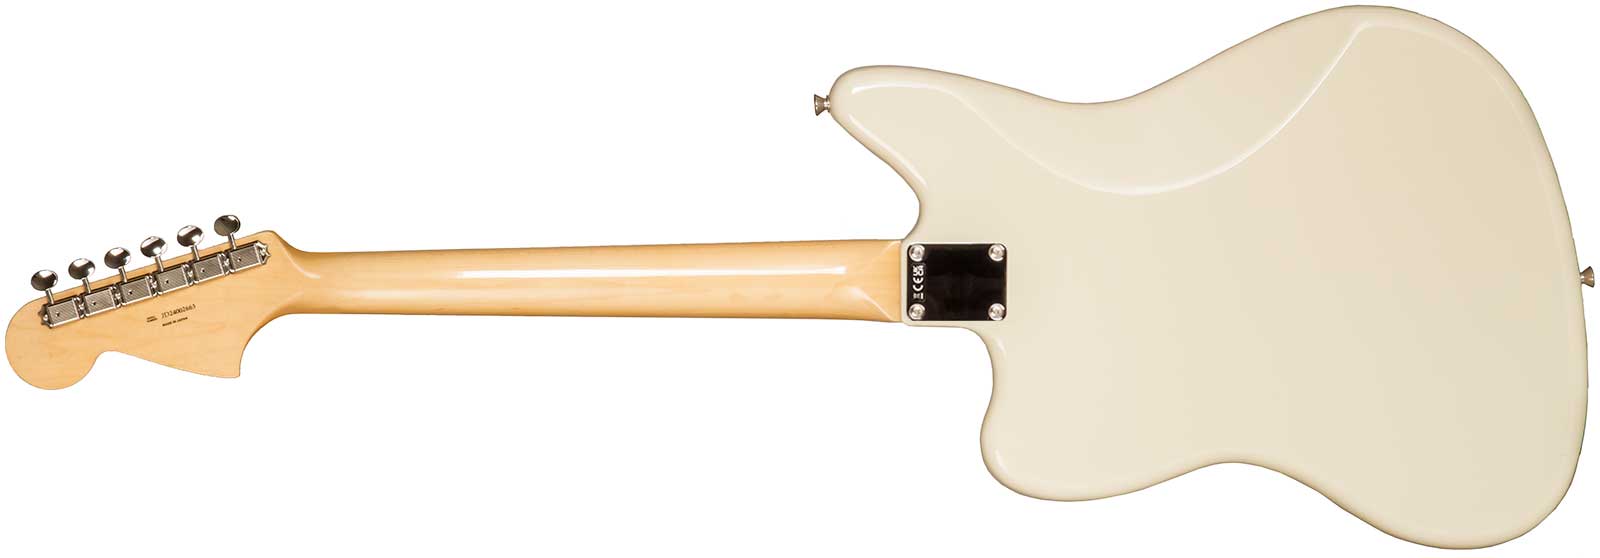 Fender Jaguar Traditional Ii 60s Japan 2s Trem Rw - Olympic White - Guitarra electrica retro rock - Variation 4